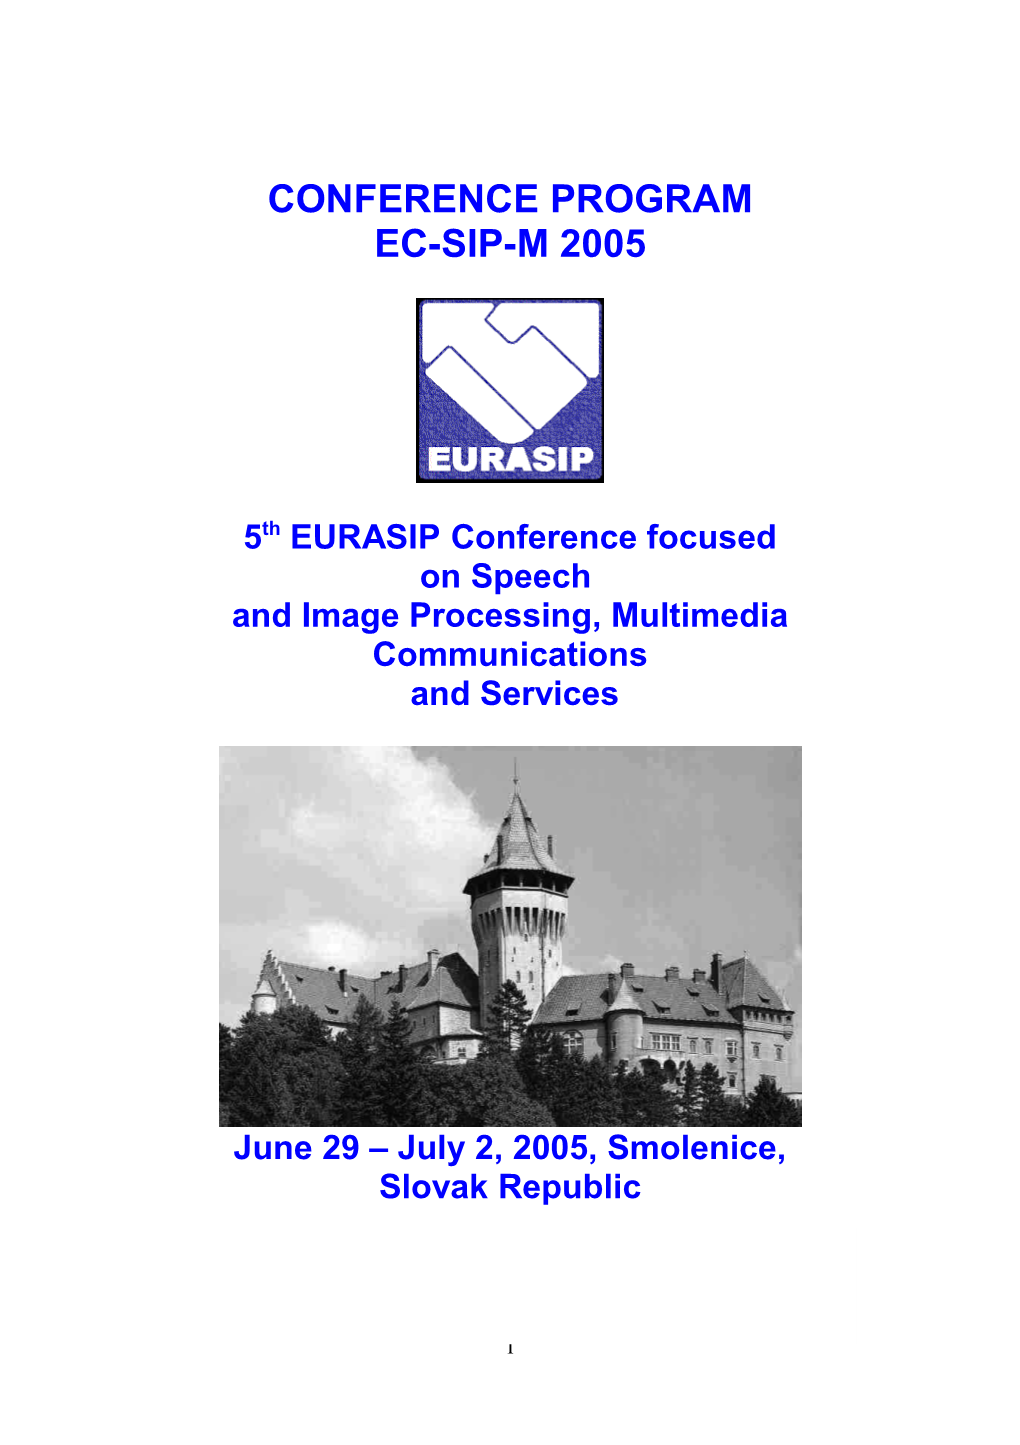 Ec-Sip-M 2005 General Information